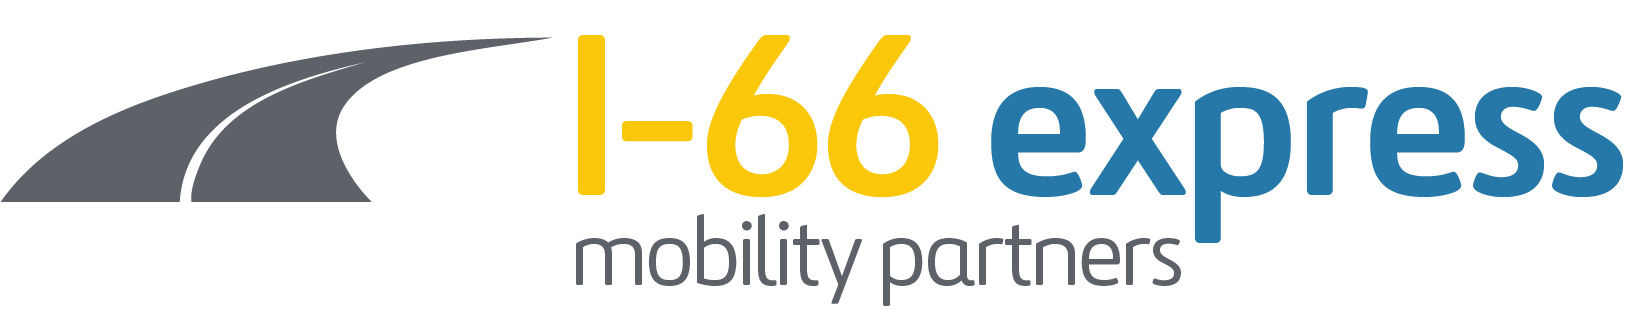 I-66 Express Mobility Partners Logo